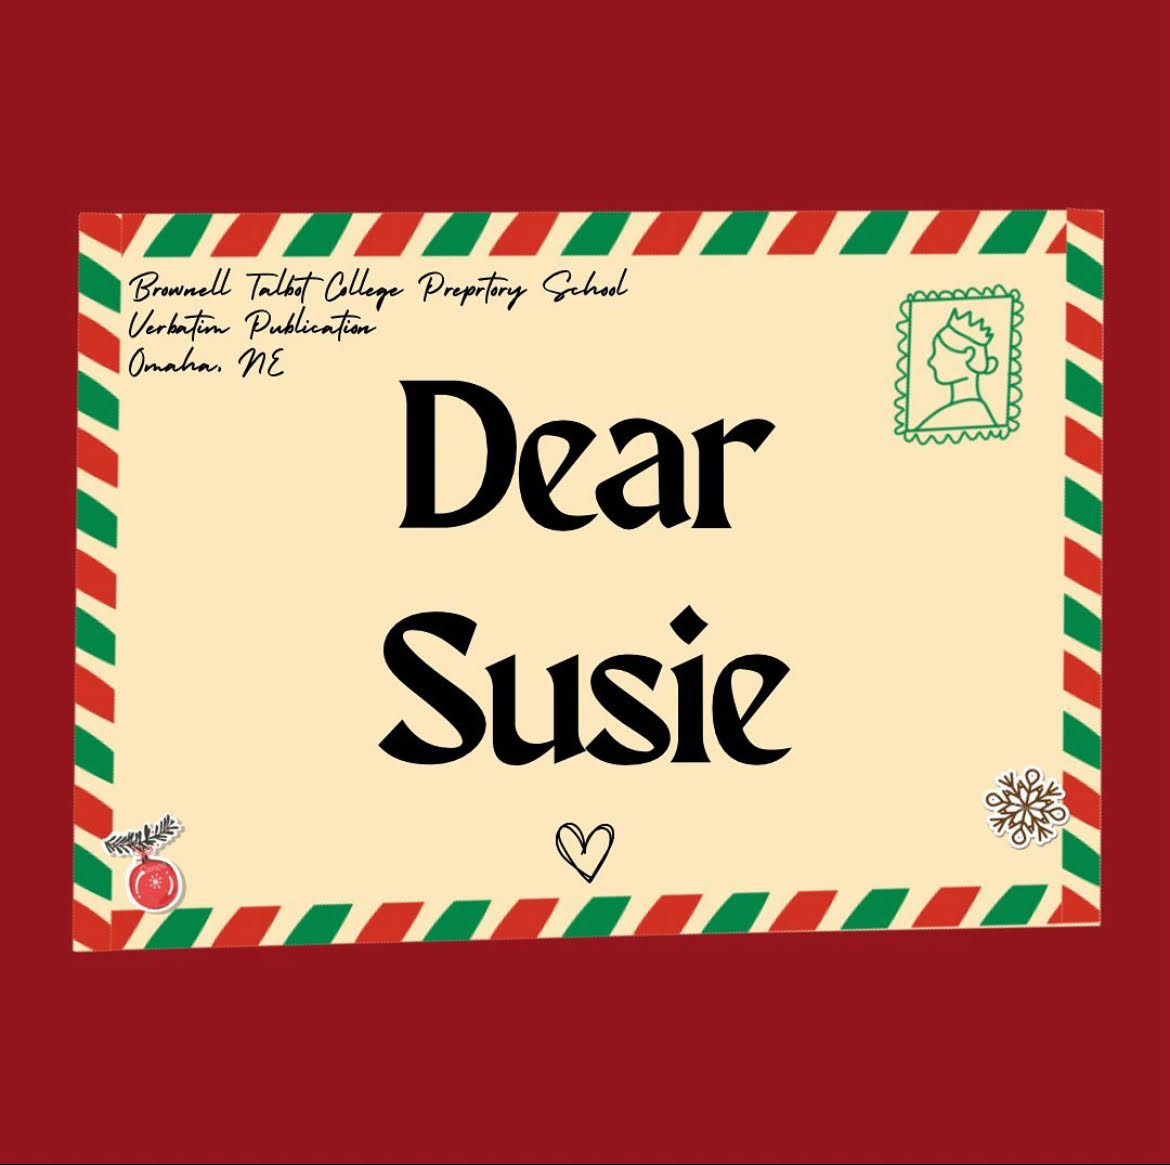 Dear Susie